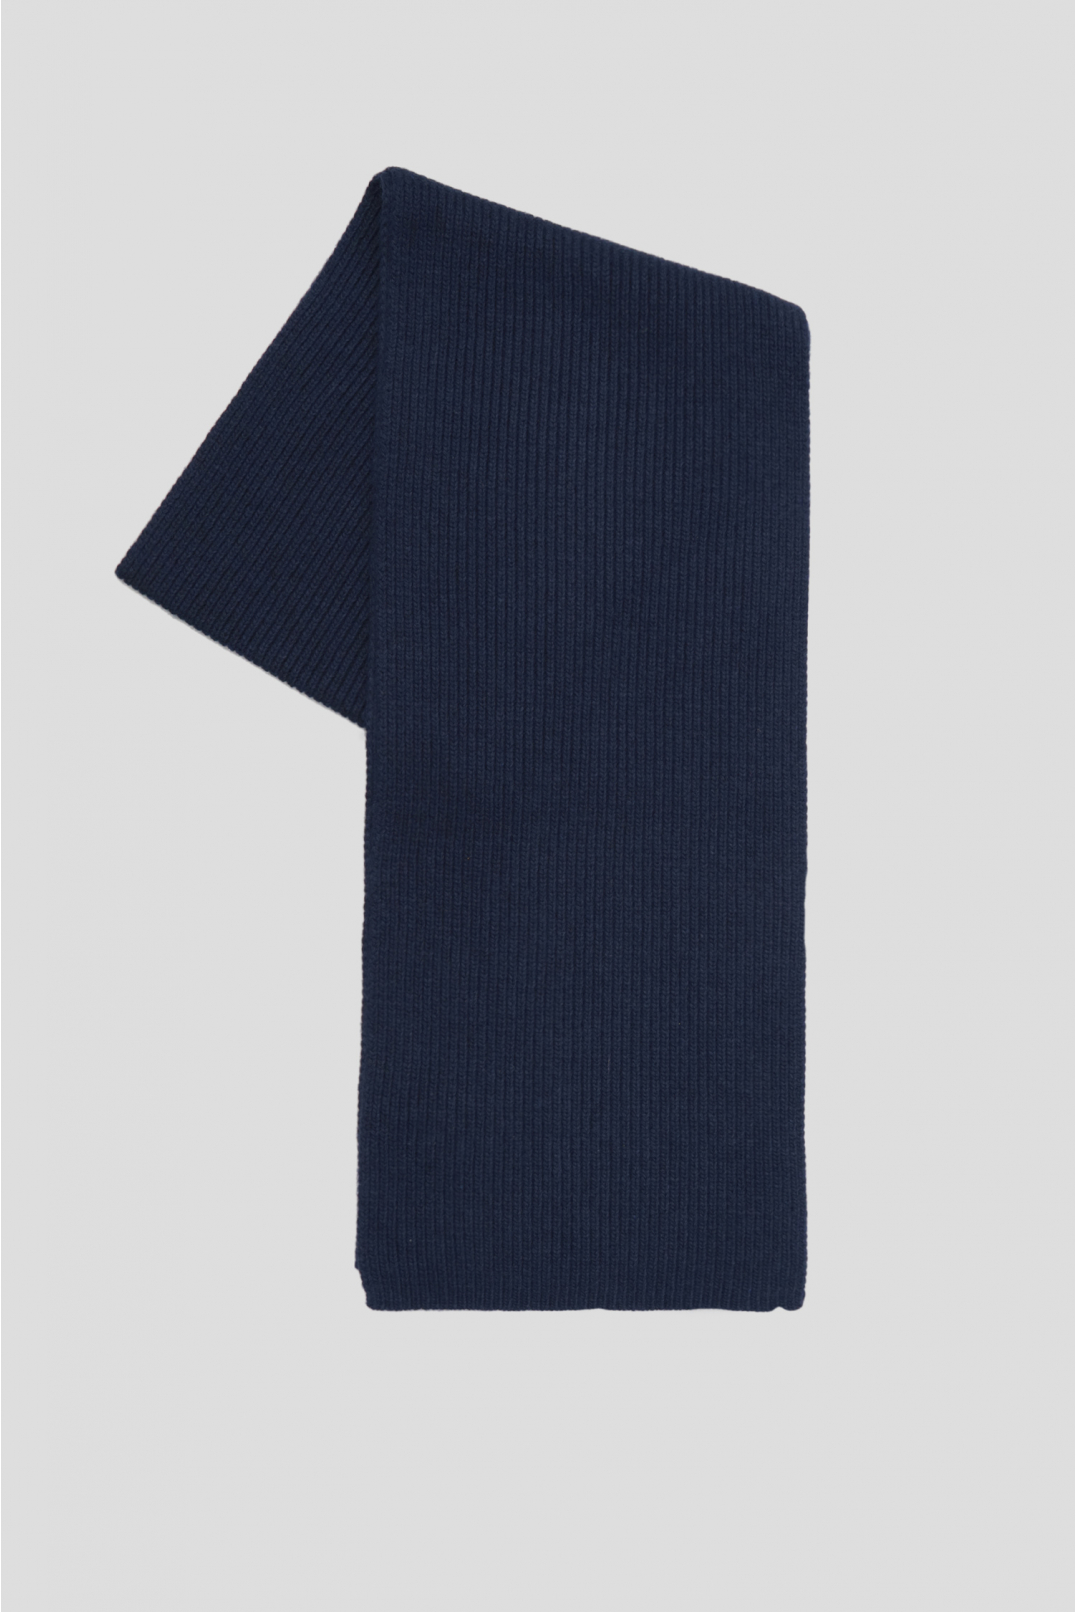 Мужской темно-синий набор аксессуаров (шапка, шарф) - 3